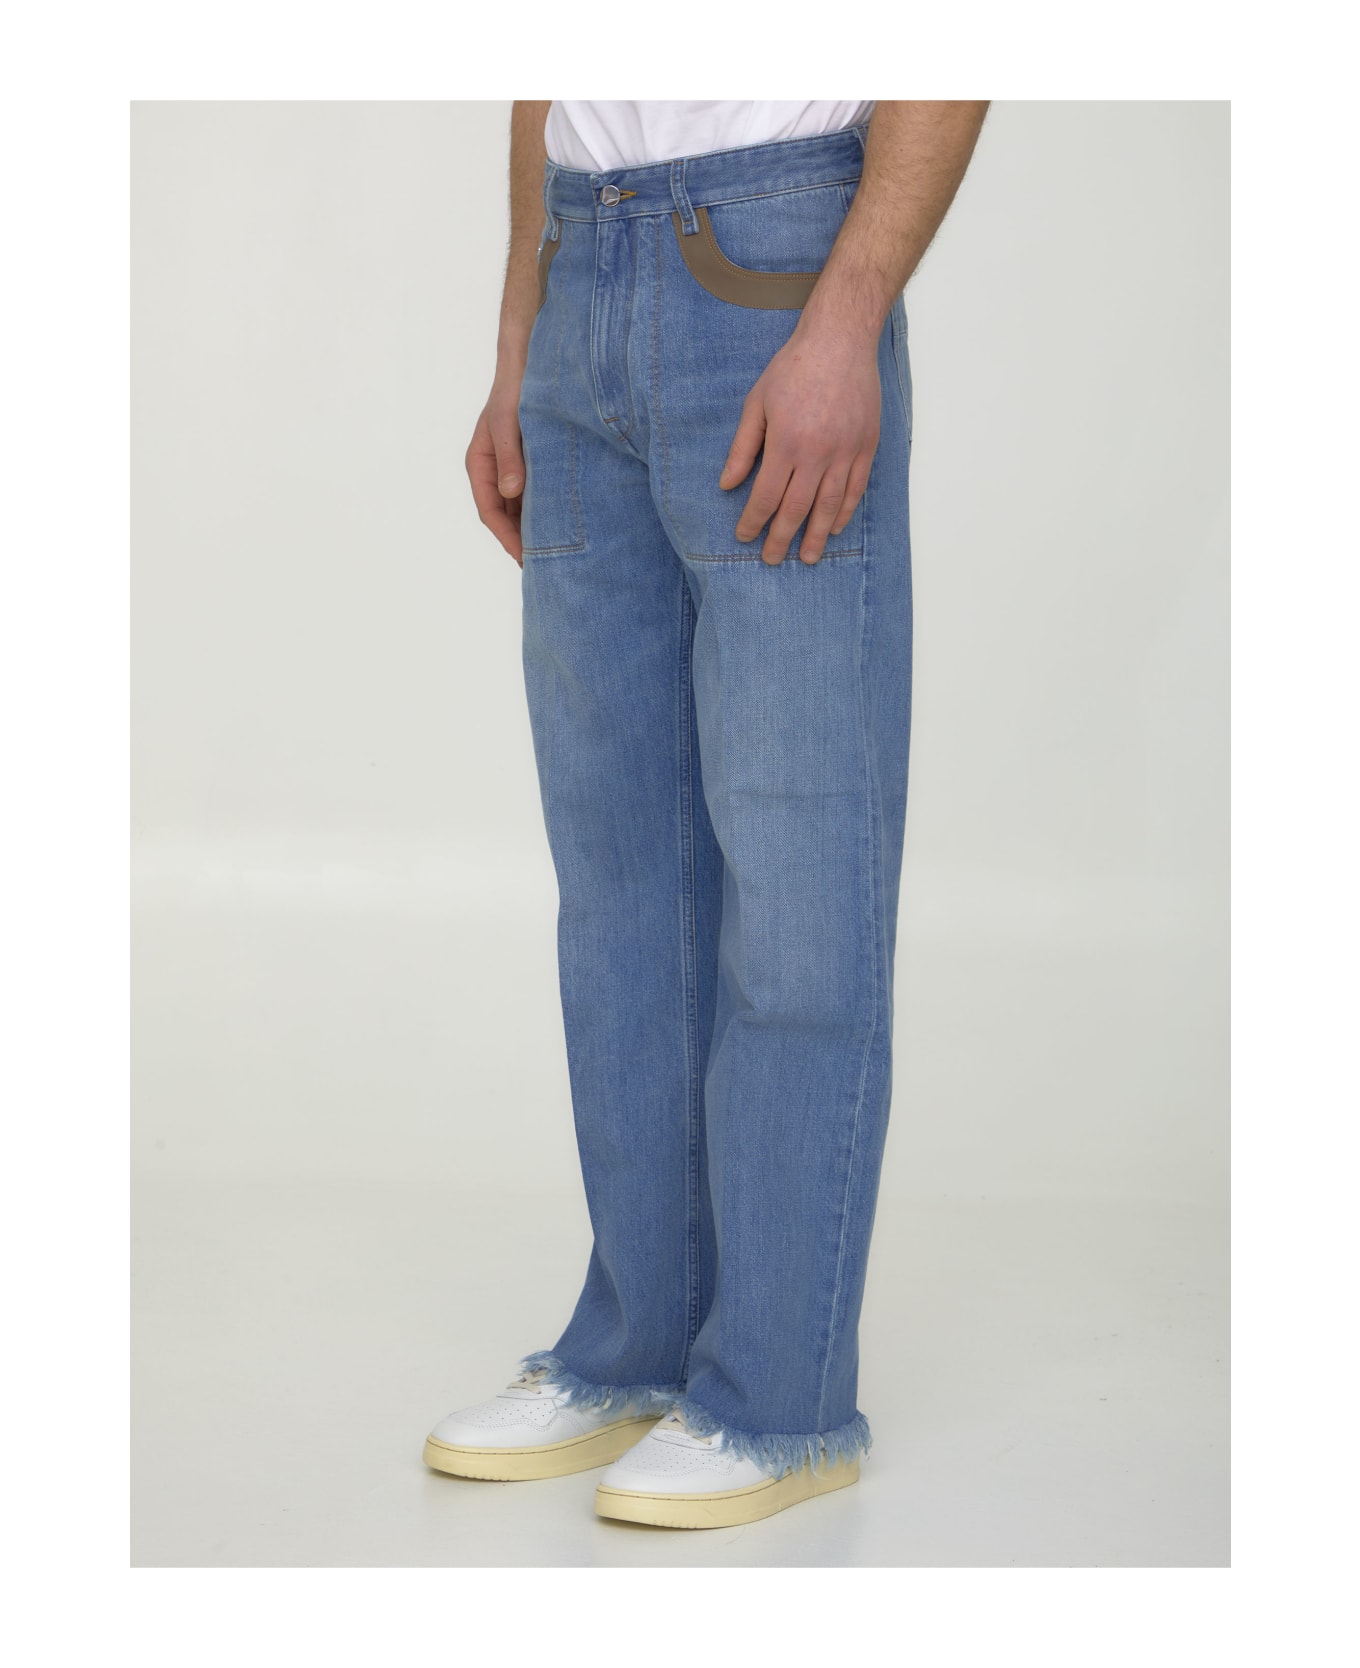 Fendi Blue Denim Jeans - NAVY デニム